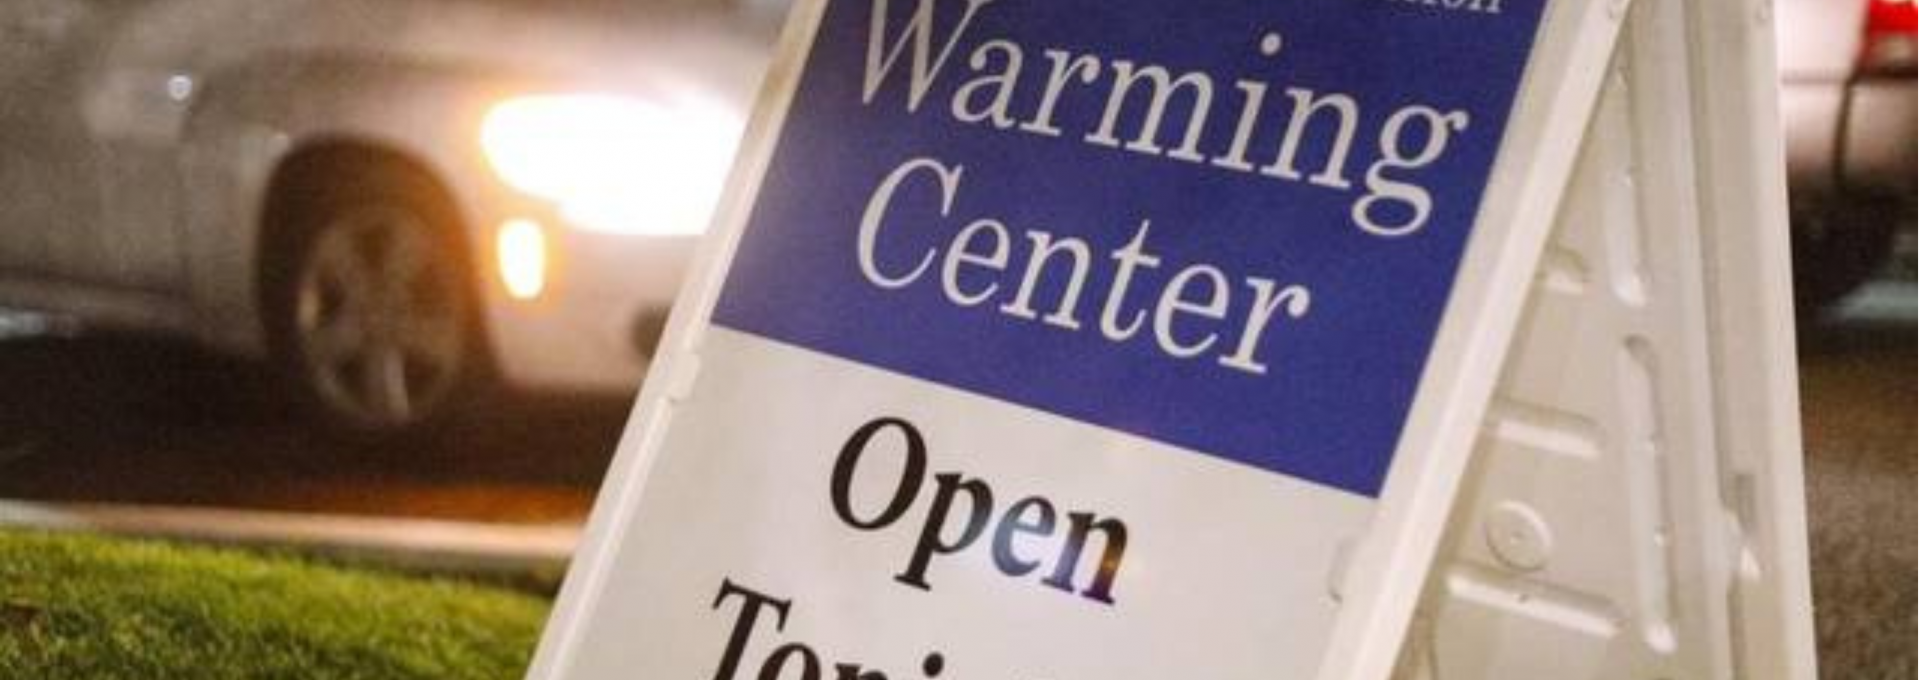 Warming Center Sign